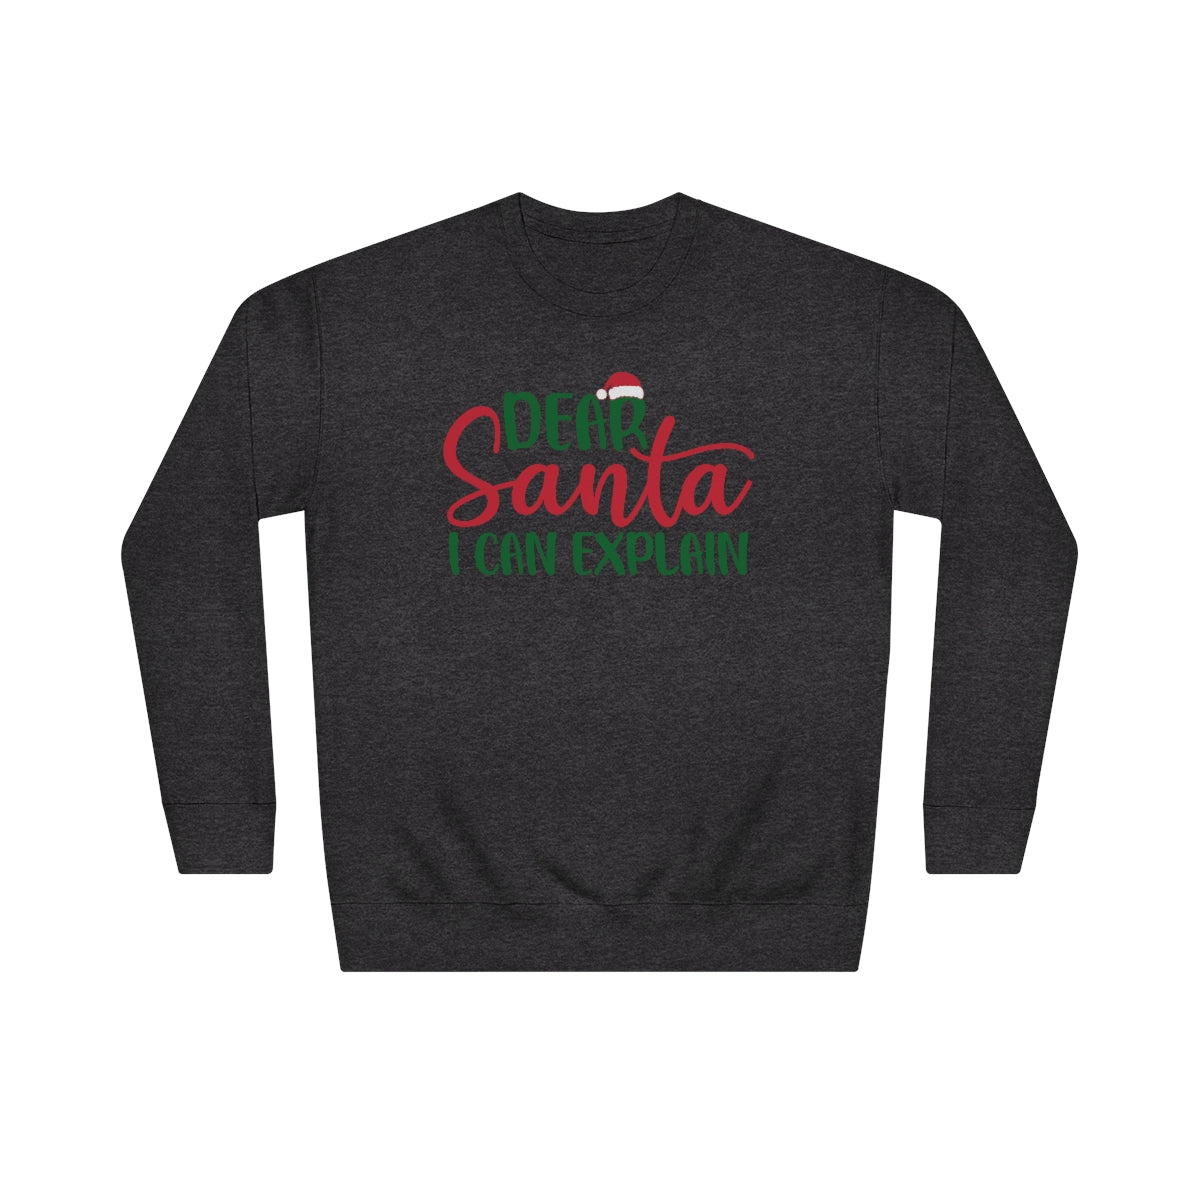 Dear Santa - Unisex Crew Sweatshirt